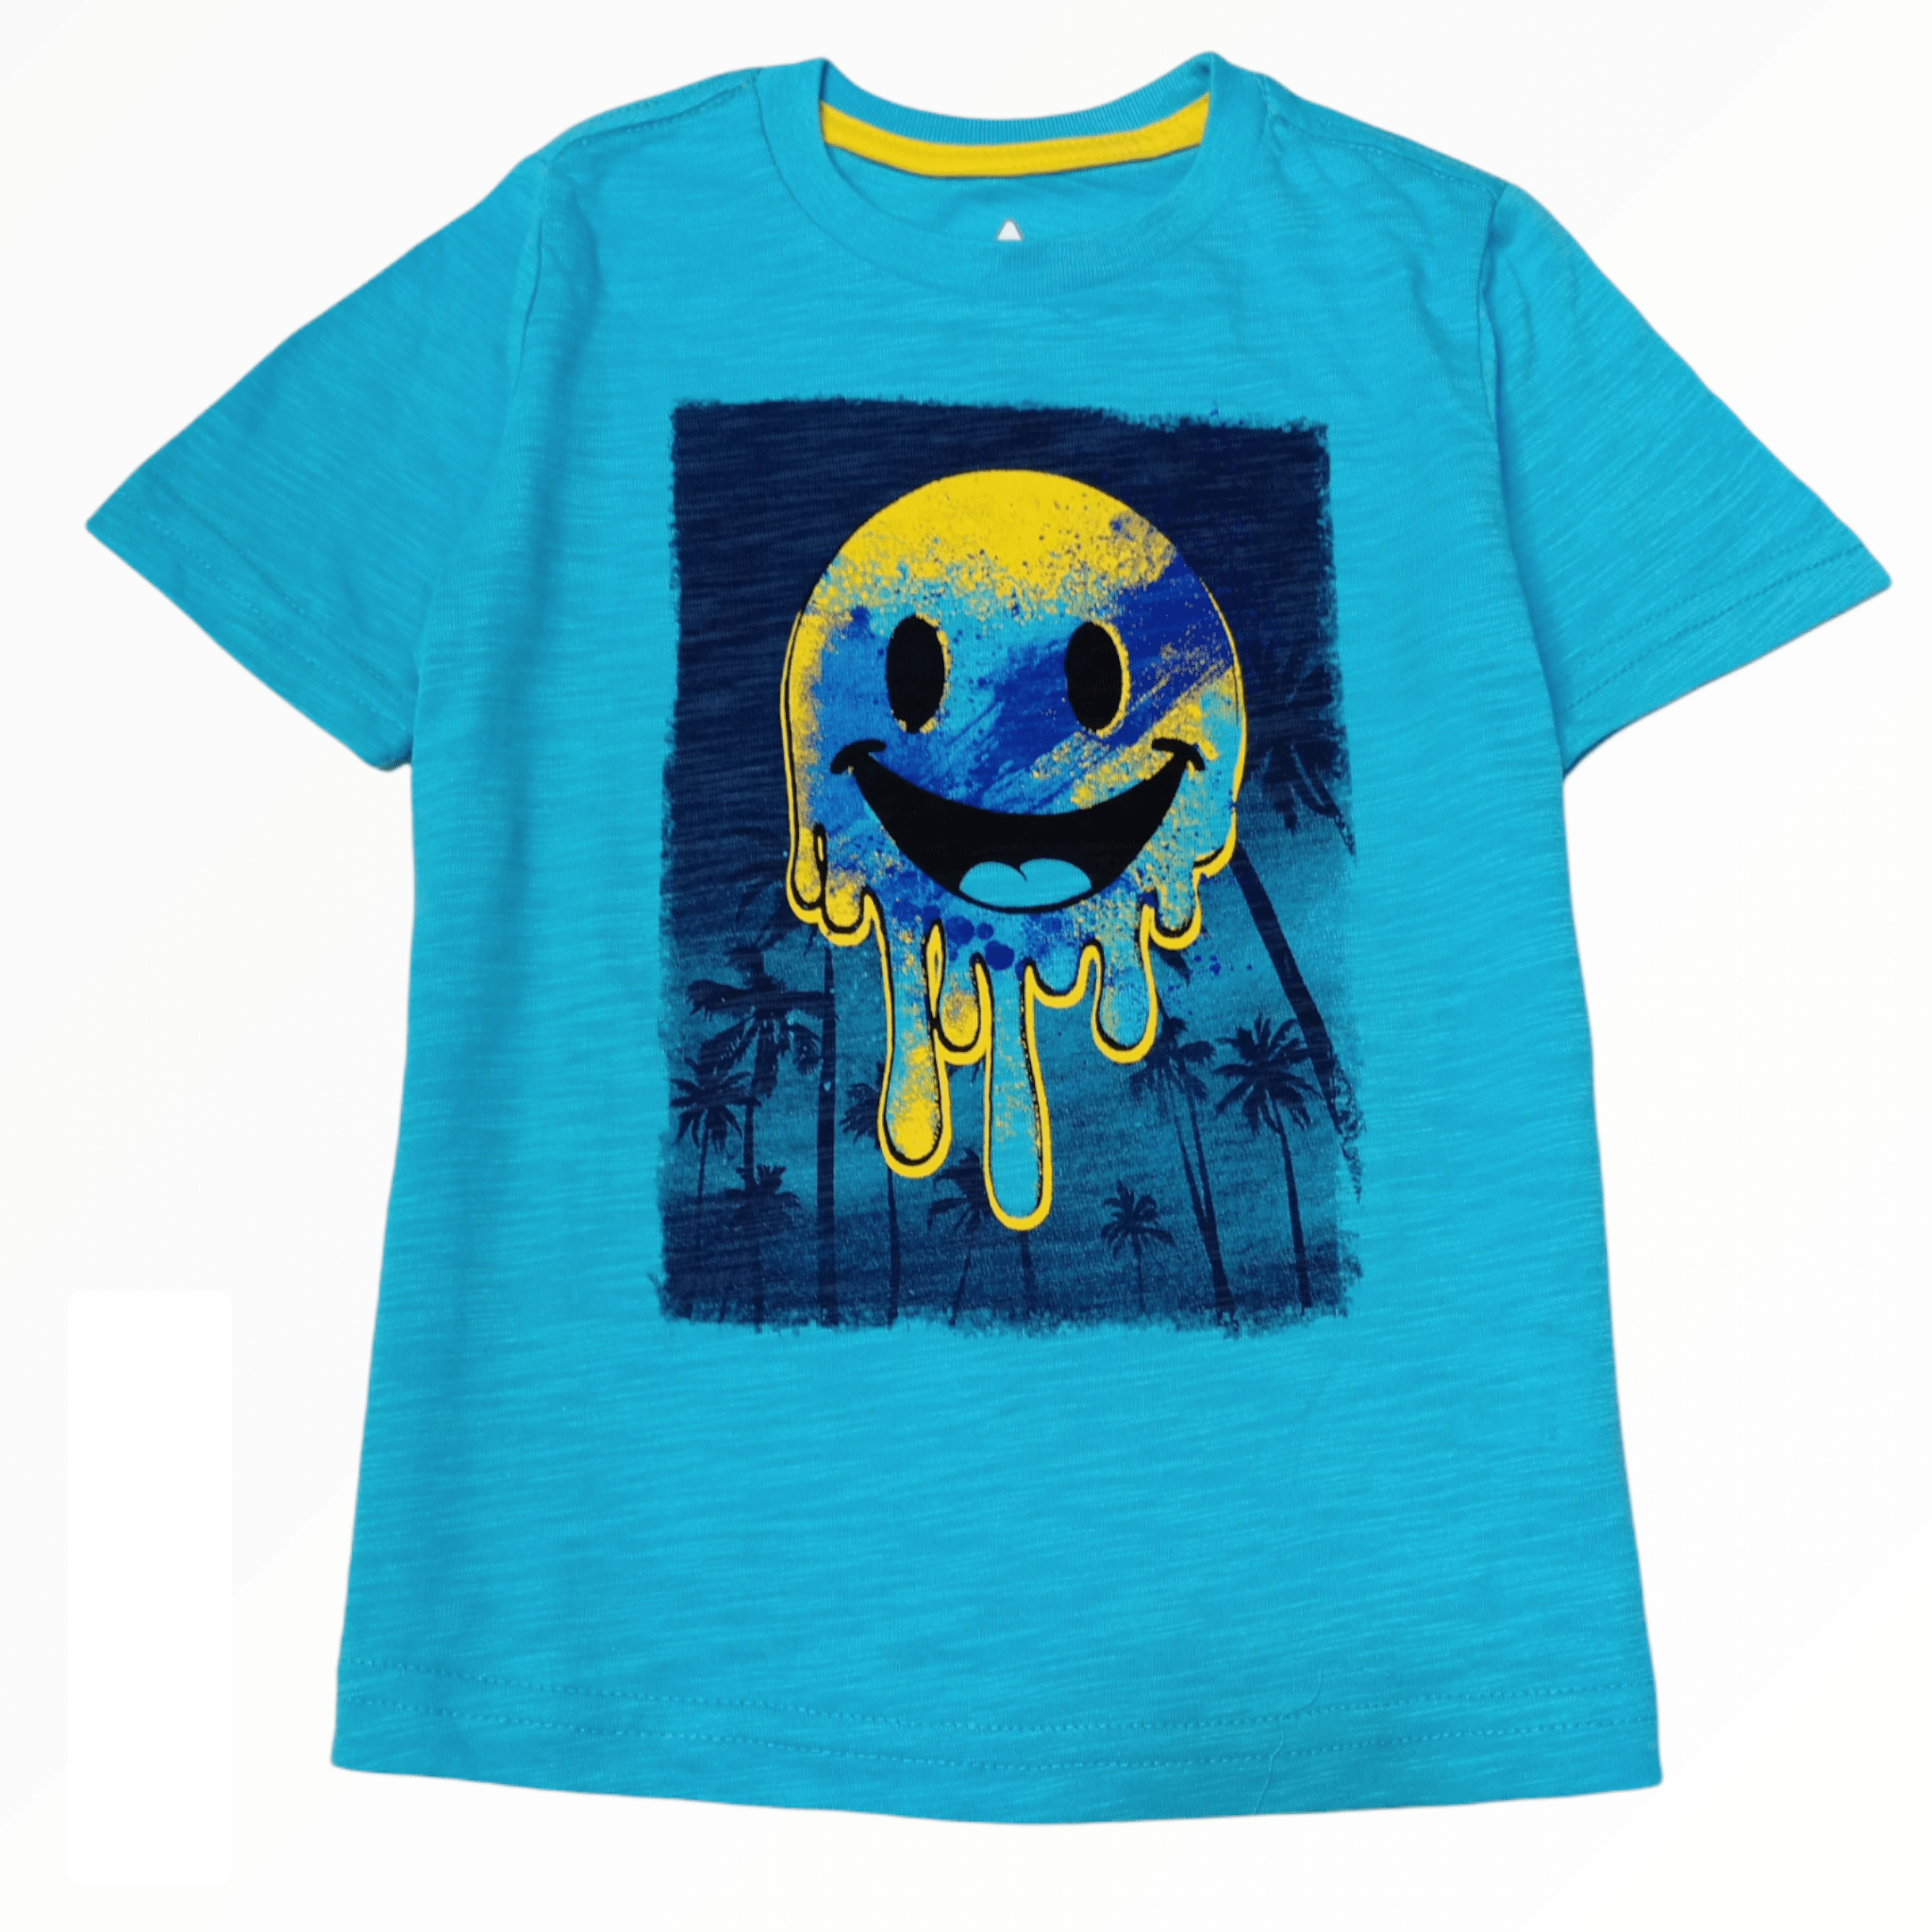 ElOutlet-Sumer Kids Kids Tshirt Boys Tshirt - 365 Kids - Blue Smiley